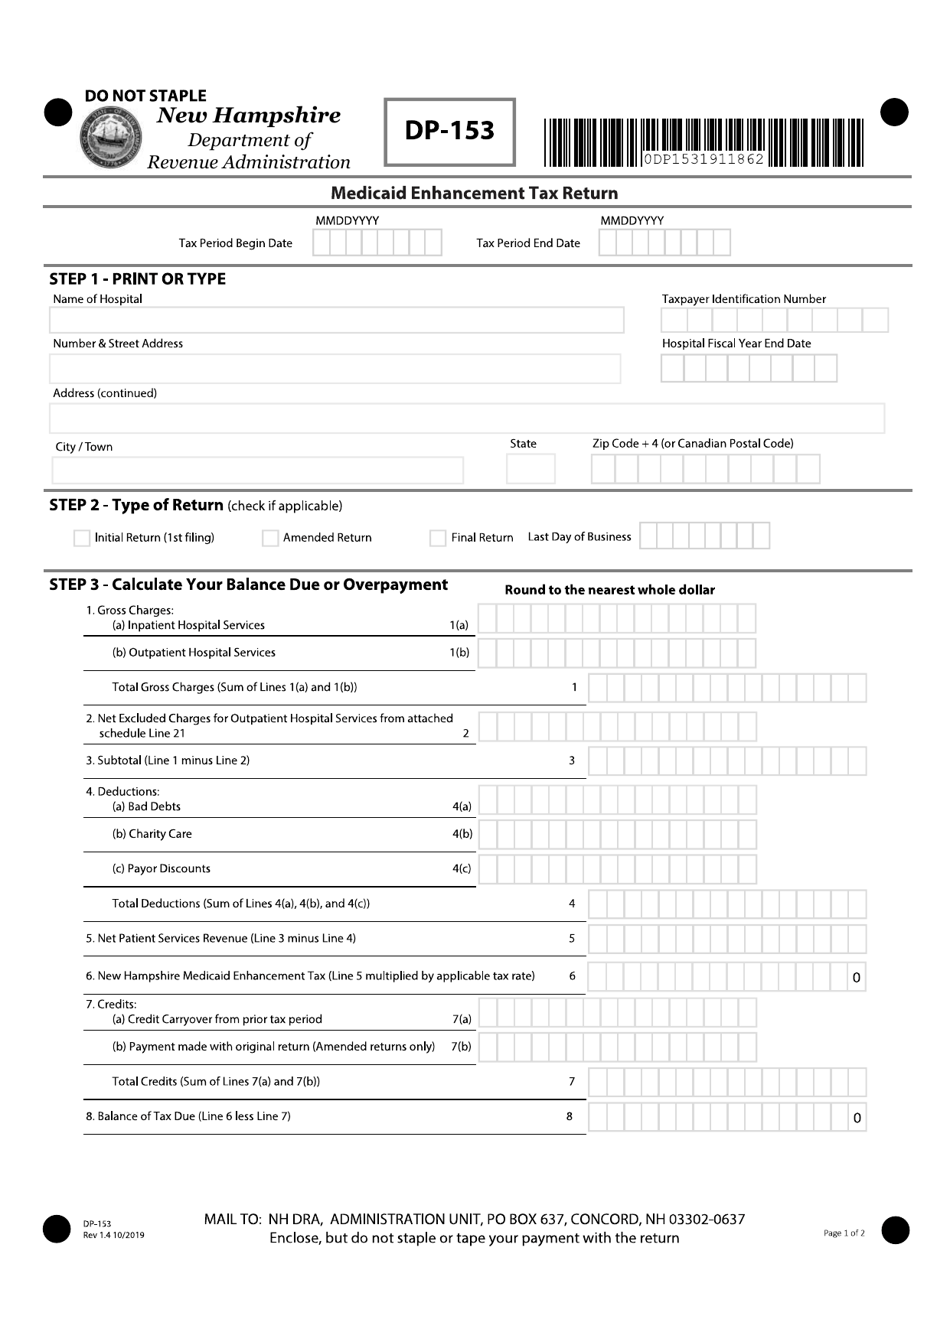 Form DP-153 Medicaid Enhancement Tax Return - New Hampshire, Page 1